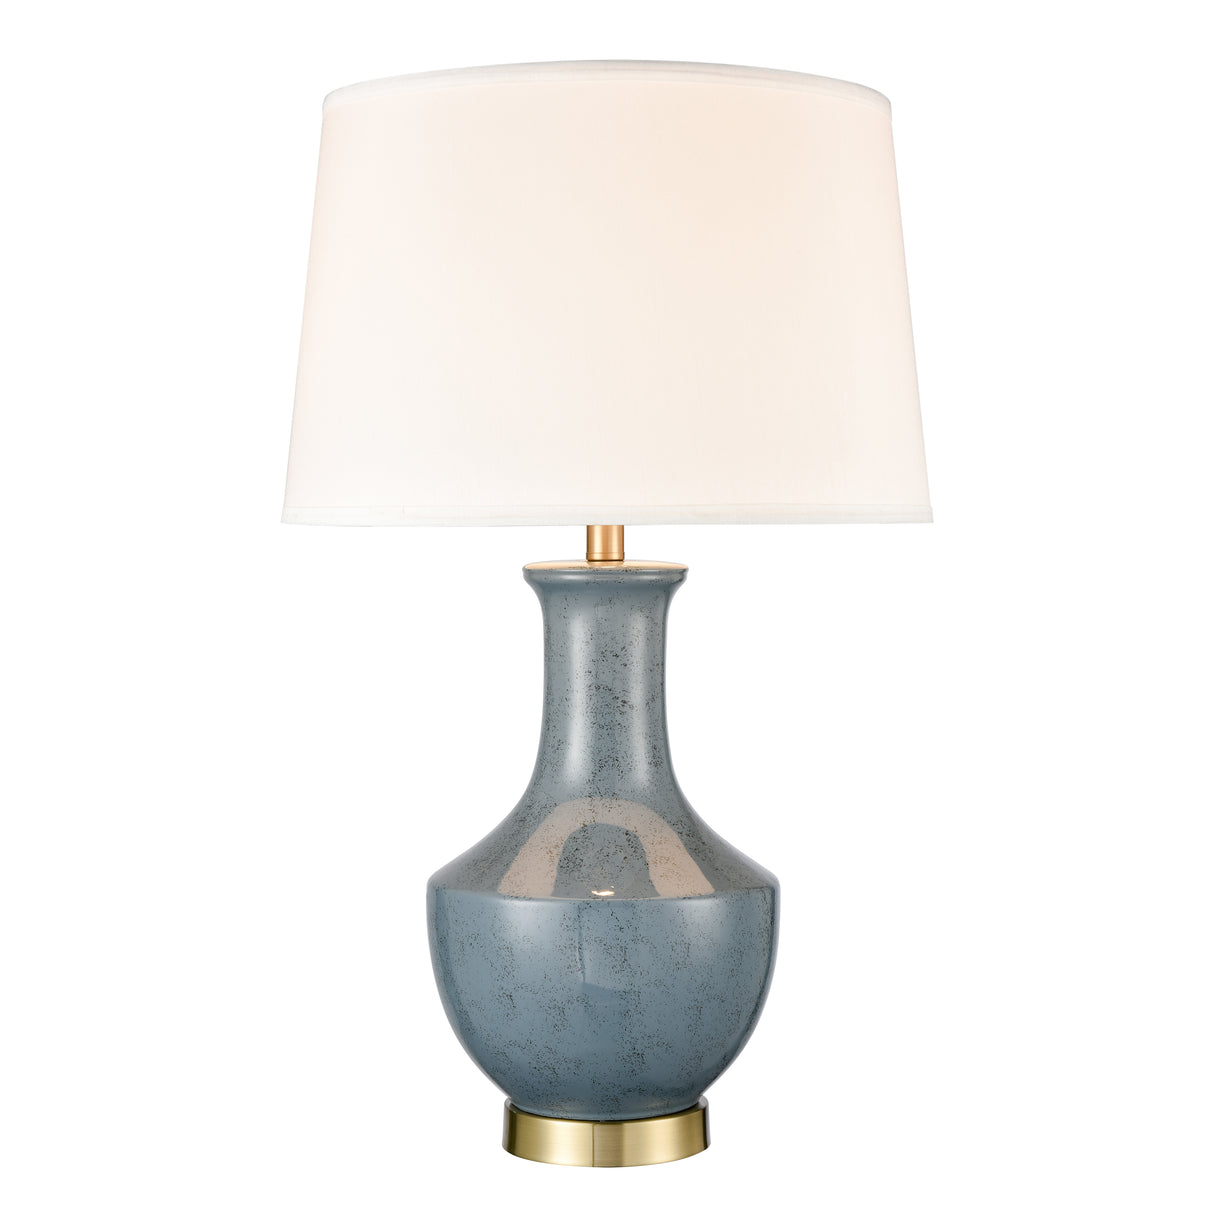 Elk S0019-8022 Nina Grove 28'' High 1-Light Table Lamp - Blue